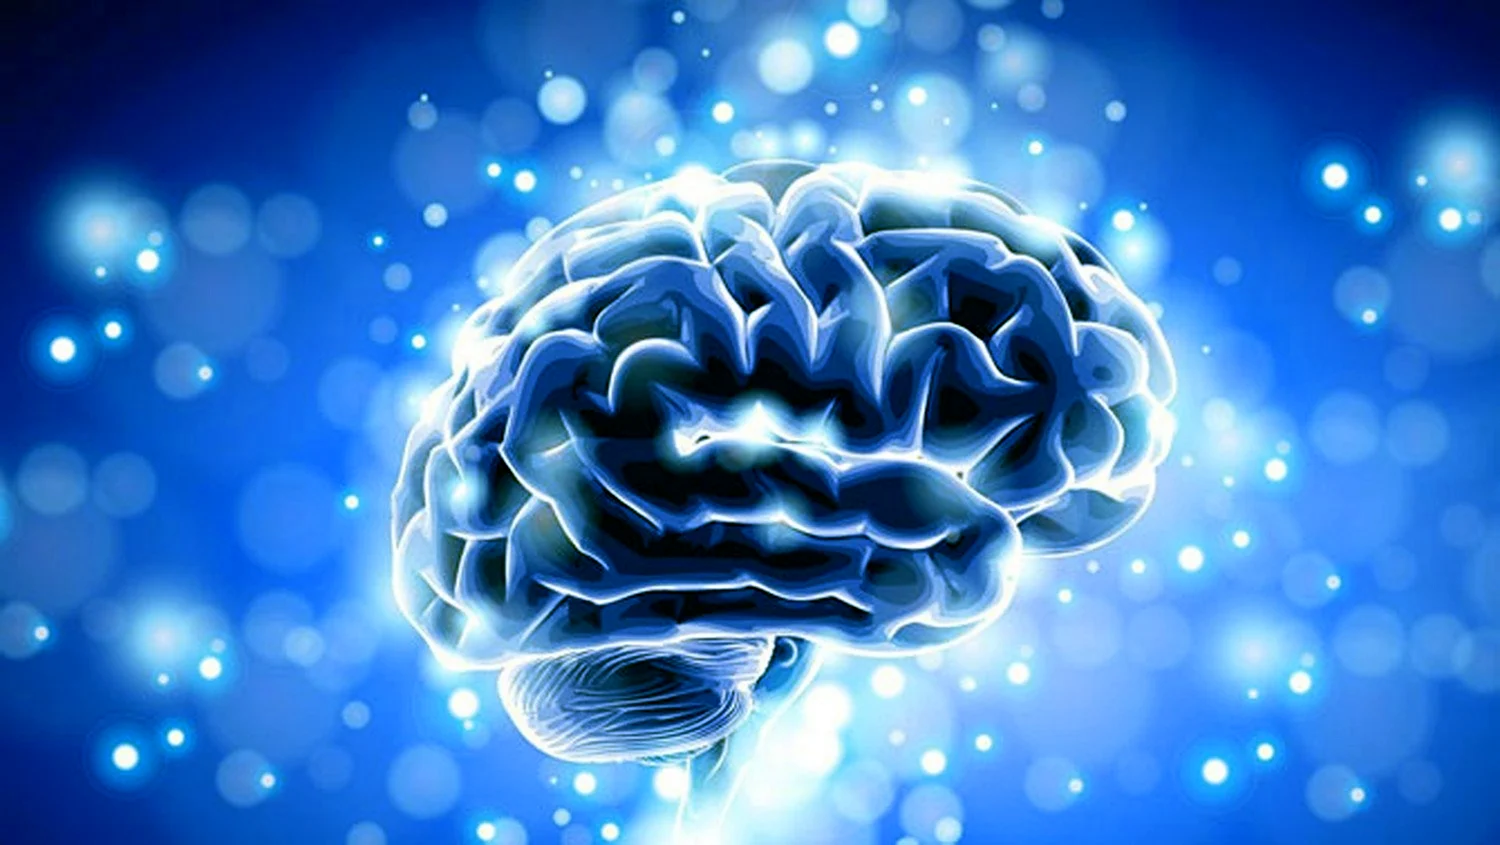 Фон с мозгами. Мозг фон. Синий мозг. Презентация мозги фон бело-синий.